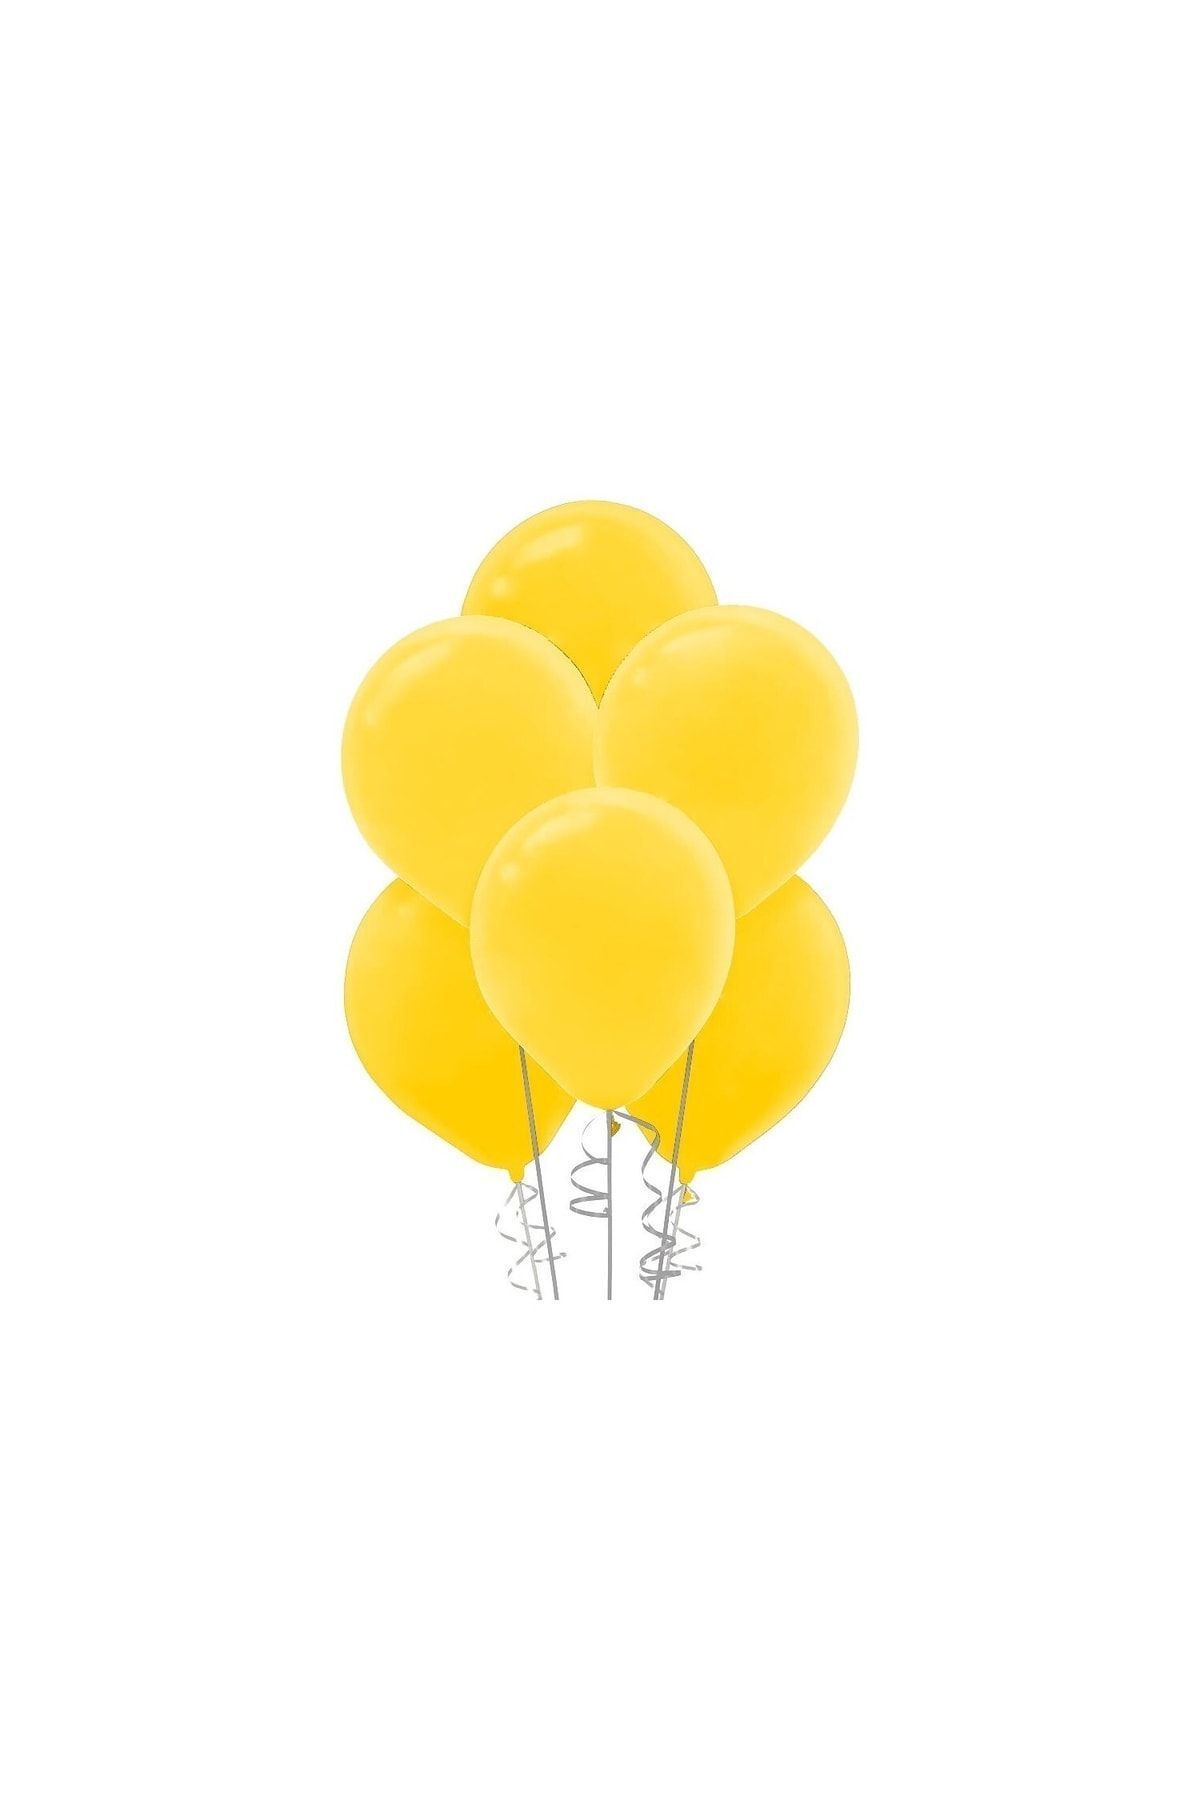 HKNYS 40 Adet Sarı Renk Pastel Balon-pastel-soft Balon-dogum Günü Parti Balonları